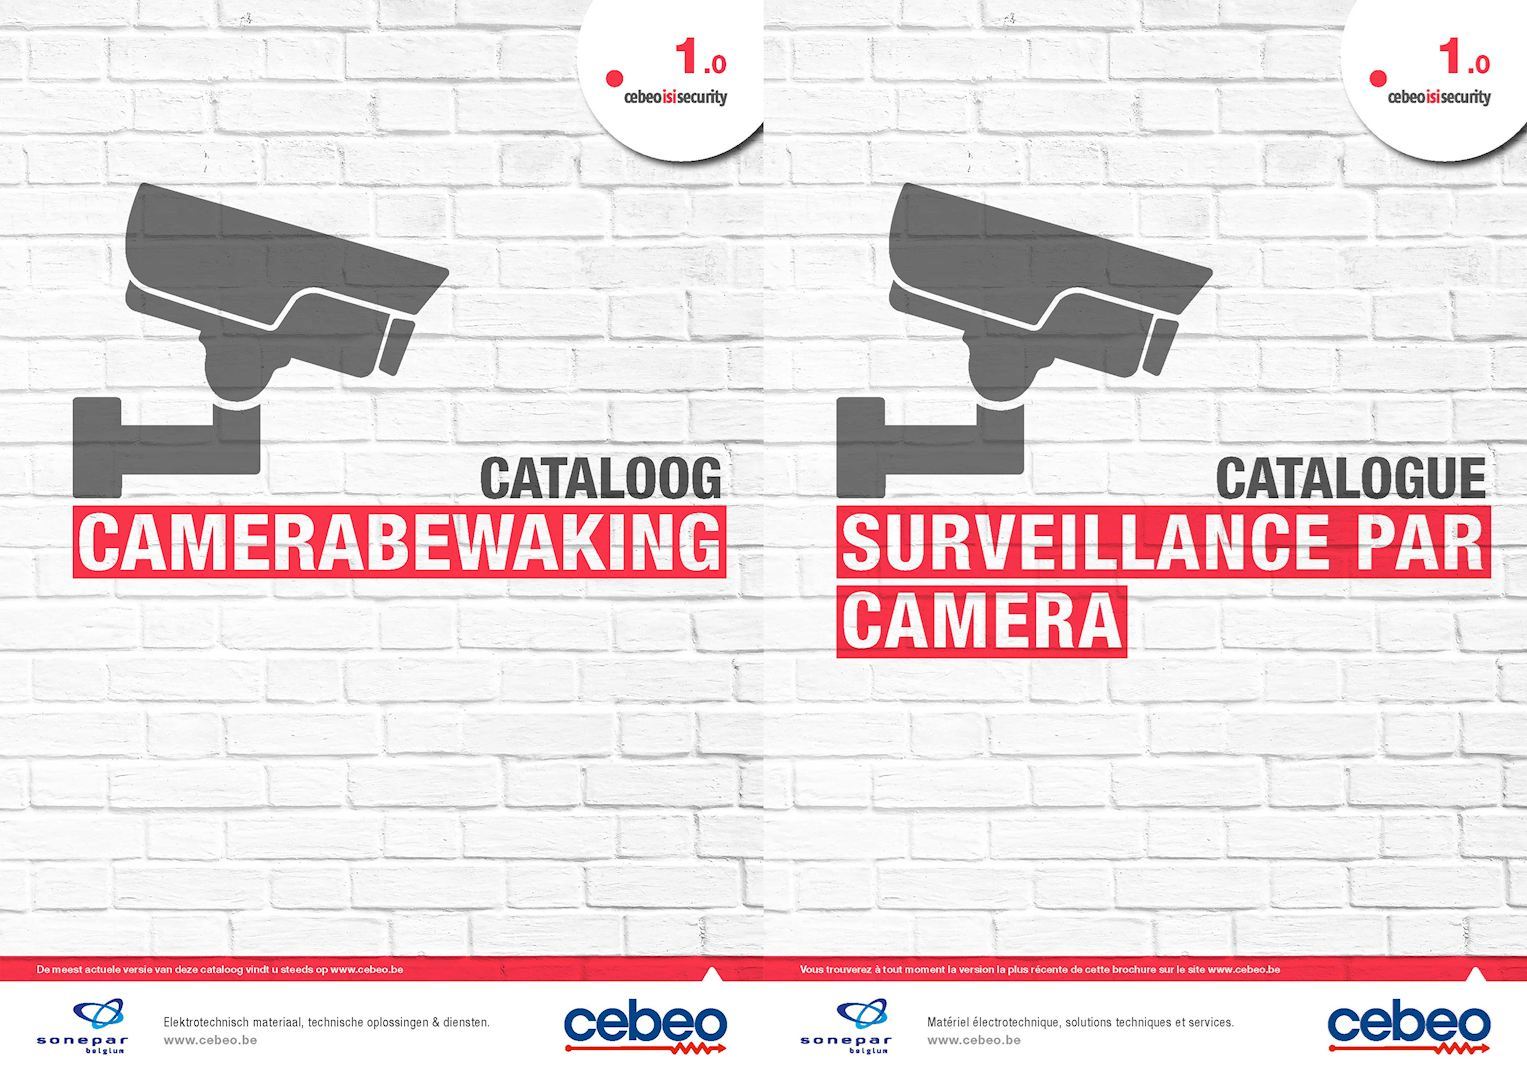 Catalogue surveillance par caméra